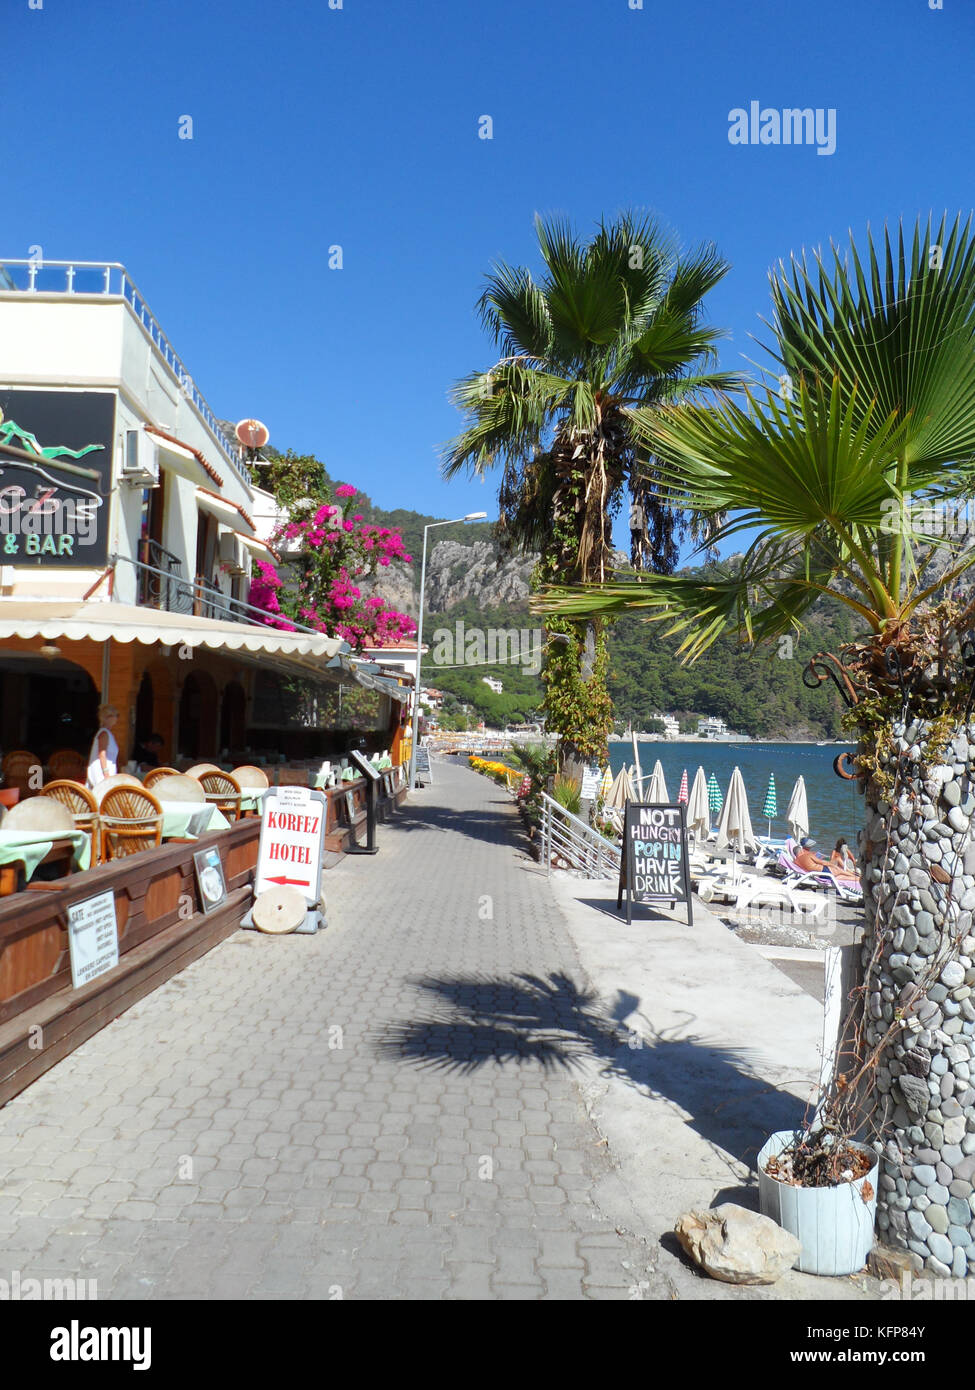 Promenade and hotel bar along the public beach, Turunc, Turkey, Europe Stock Photo